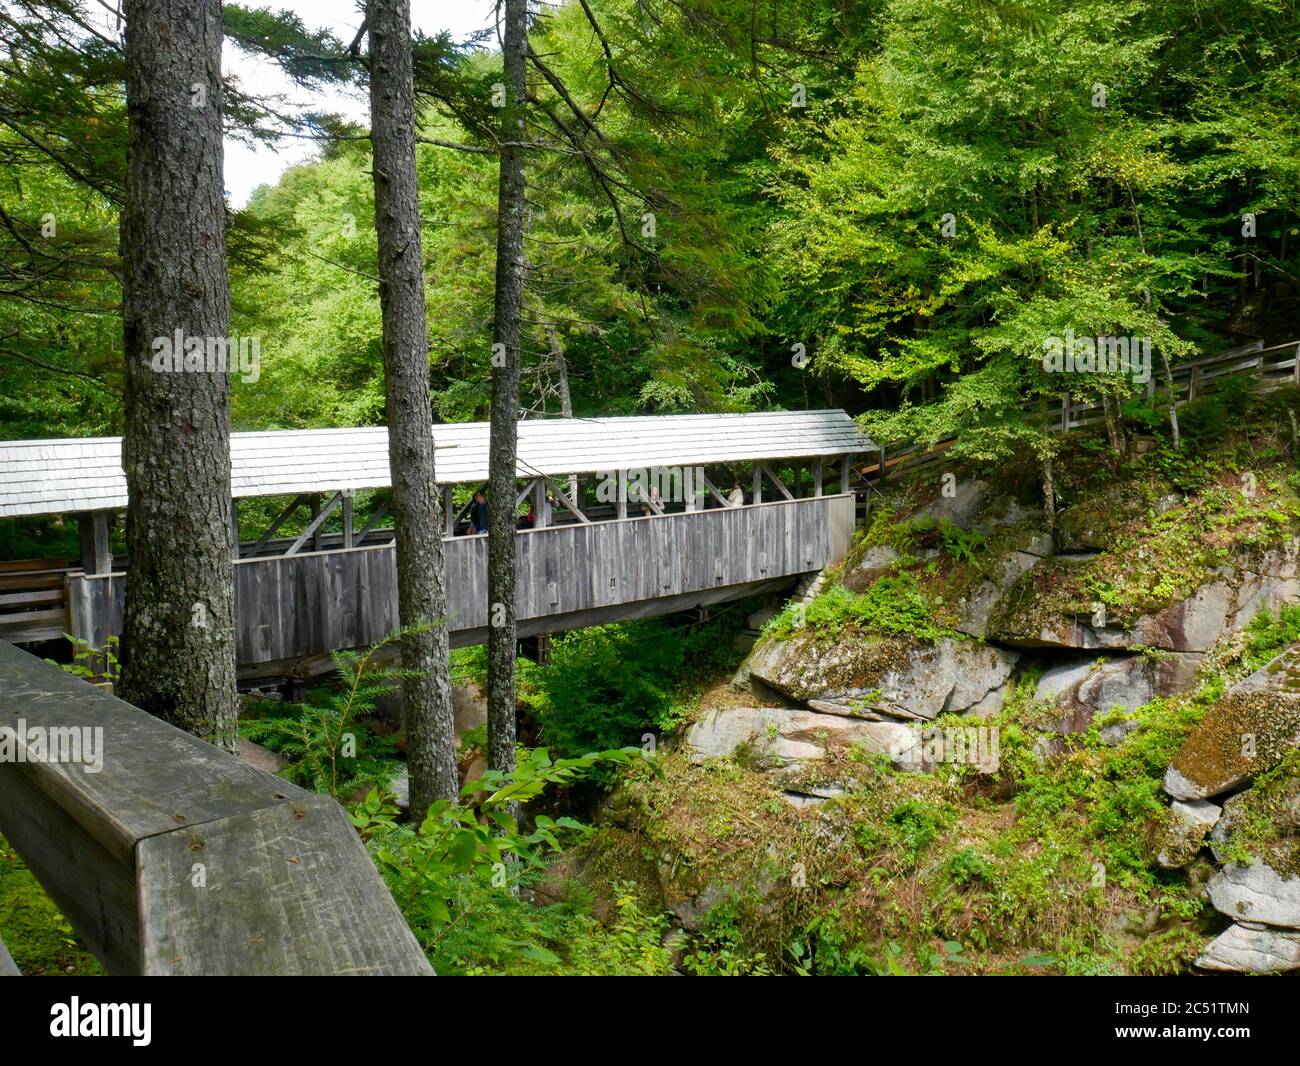 Sentinel Pine Covered Bridge over Gorge, Franconia Notch State Park, New Hampshire, USA Stockfoto